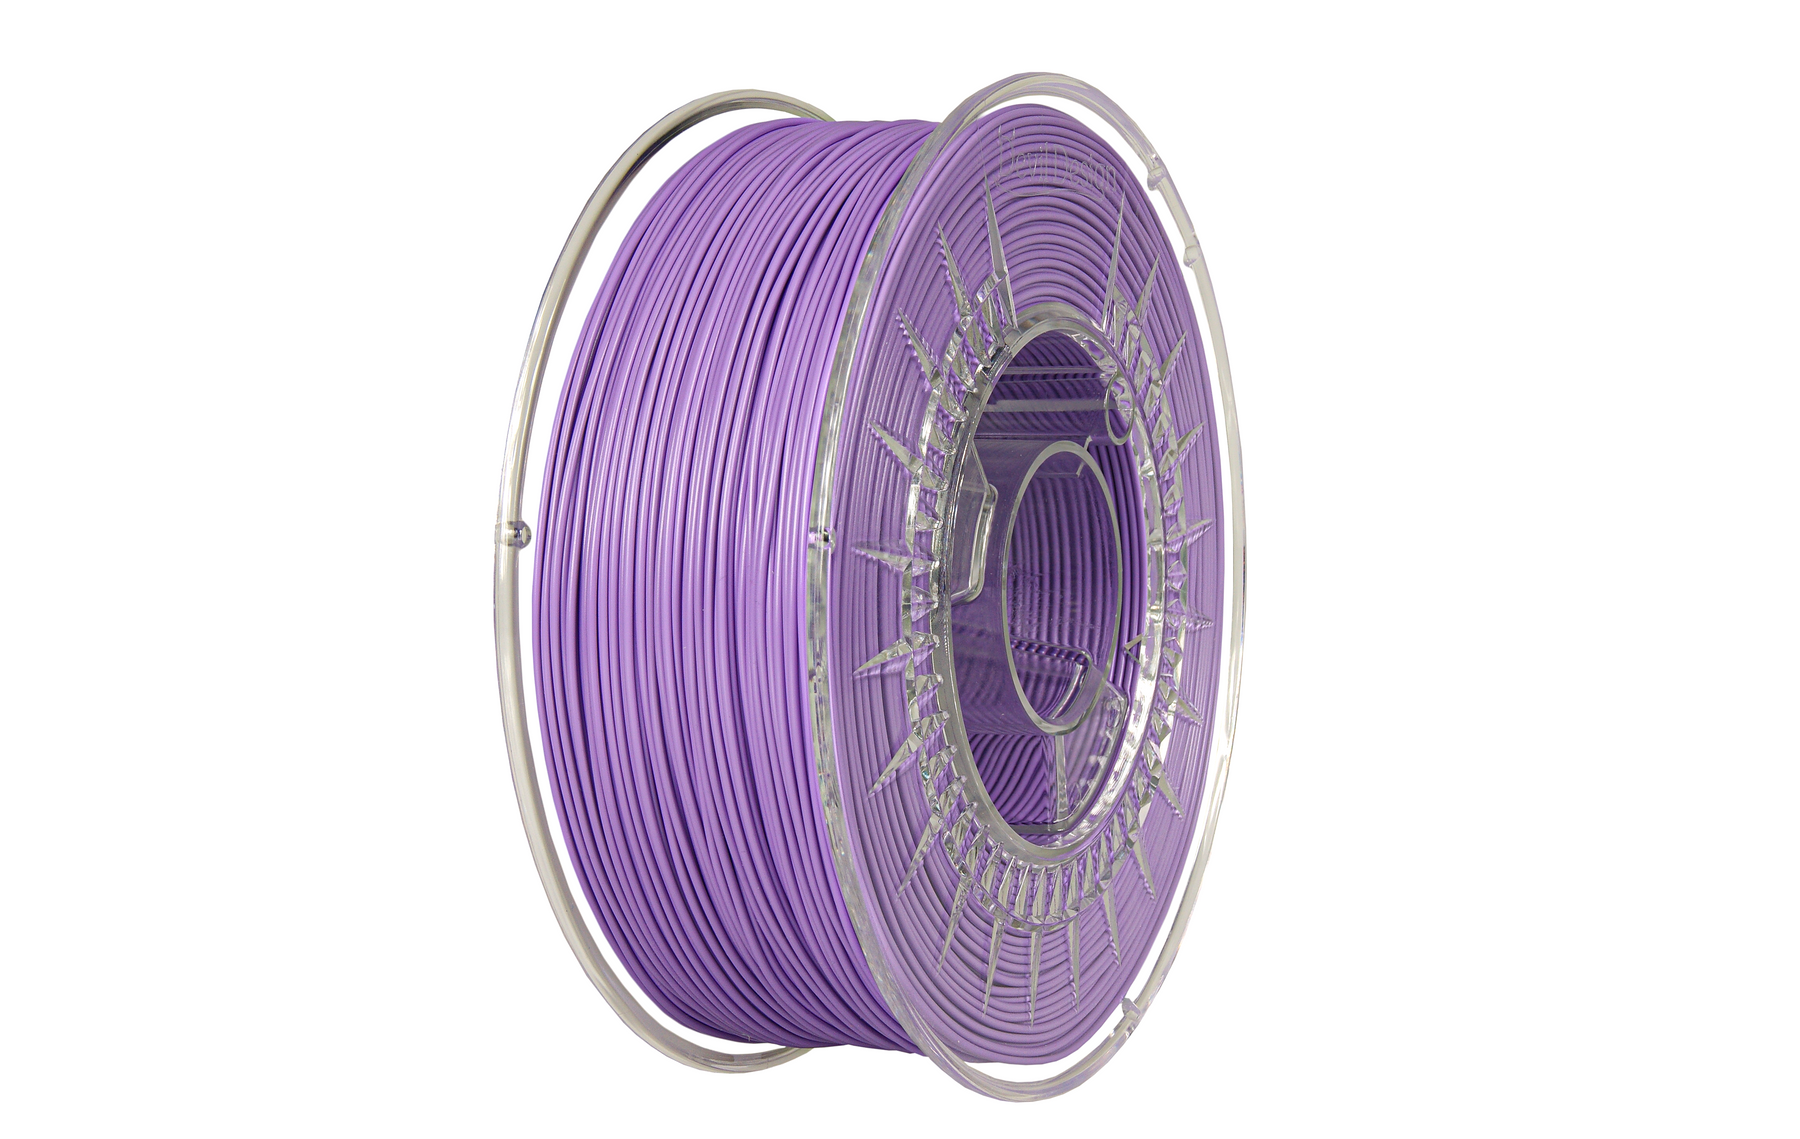 PETG-Filament | 1,75 mm | 1 kg | DEVIL DESIGN 3D Druck Filament